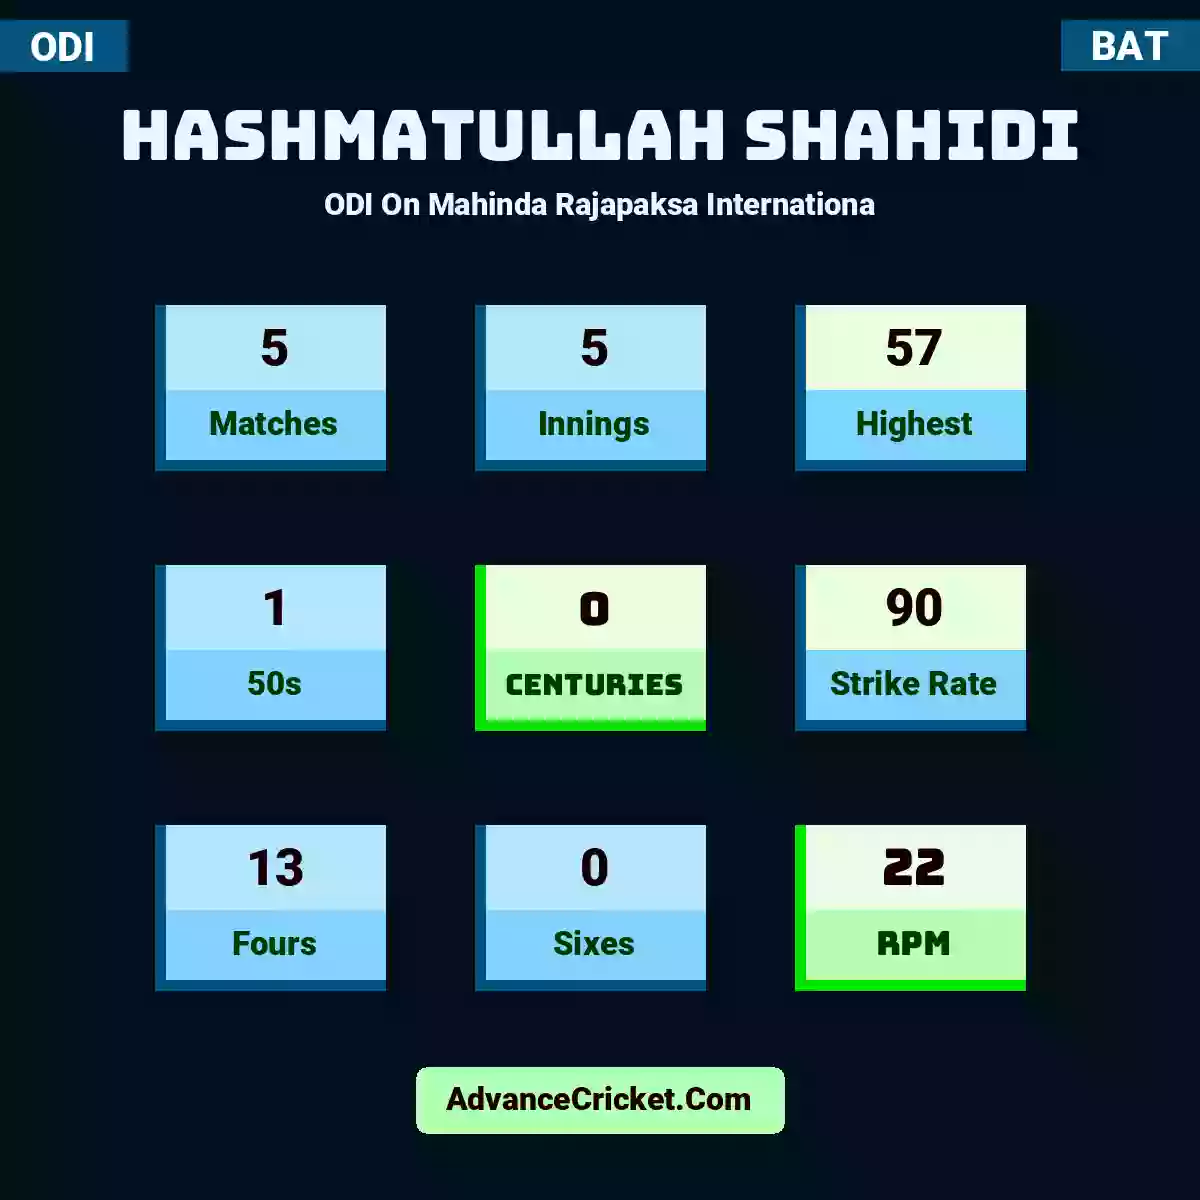 Hashmatullah Shahidi ODI  On Mahinda Rajapaksa Internationa, Hashmatullah Shahidi played 5 matches, scored 57 runs as highest, 1 half-centuries, and 0 centuries, with a strike rate of 90. H.Shahidi hit 13 fours and 0 sixes, with an RPM of 22.